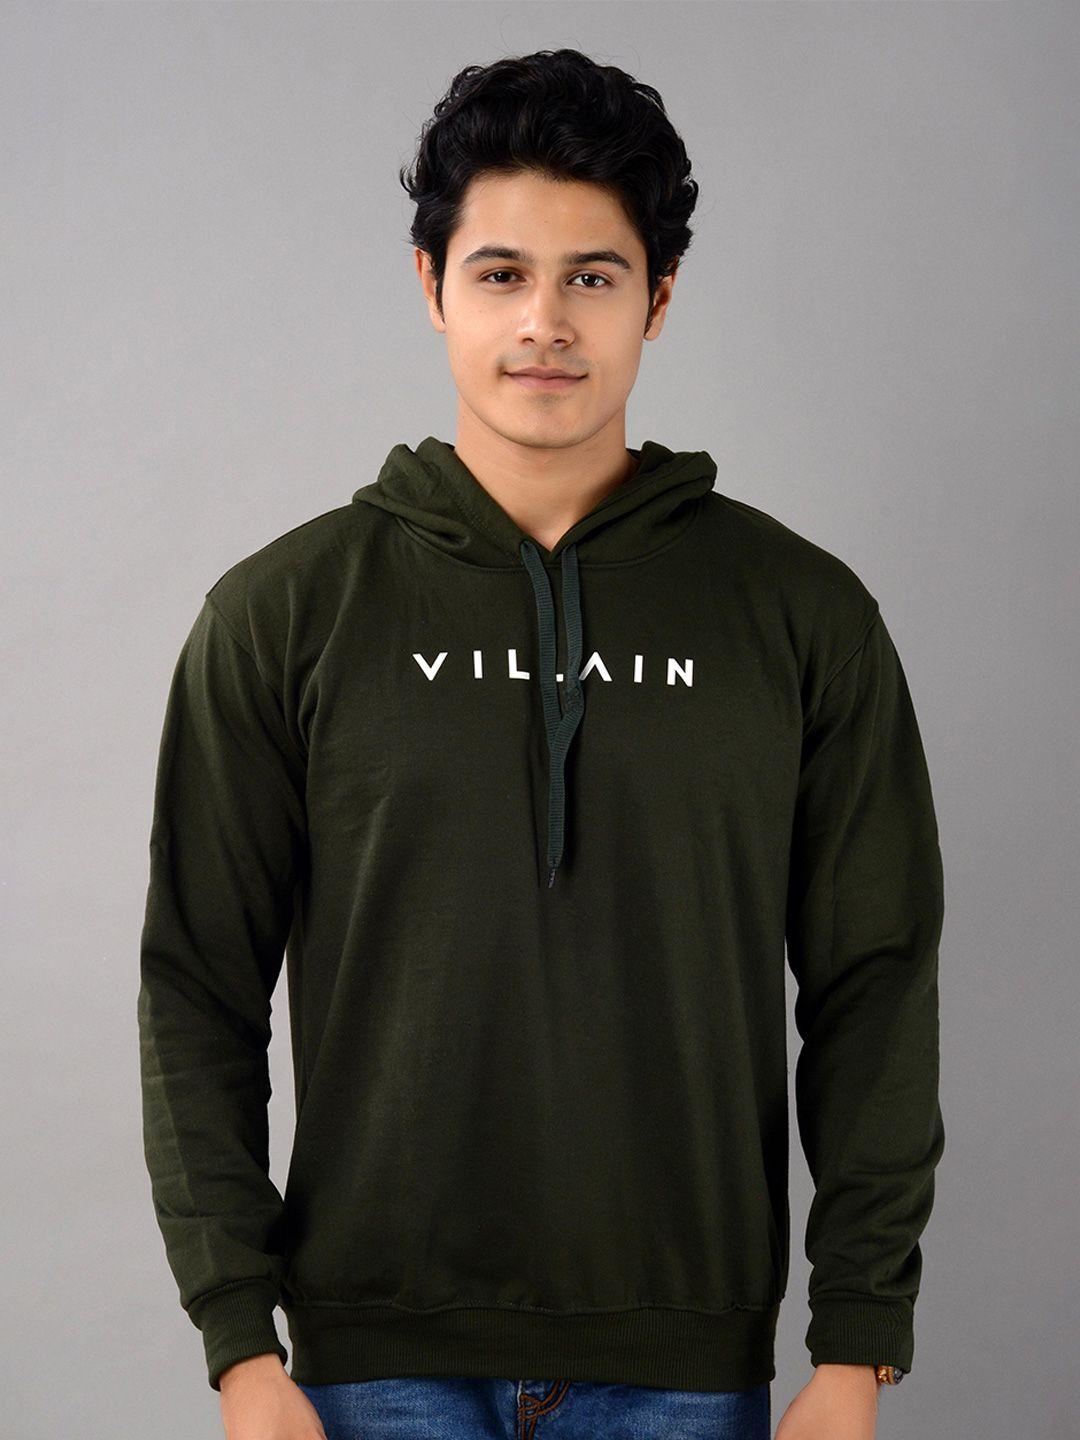 villain brand logo printed hooded sweatshirt